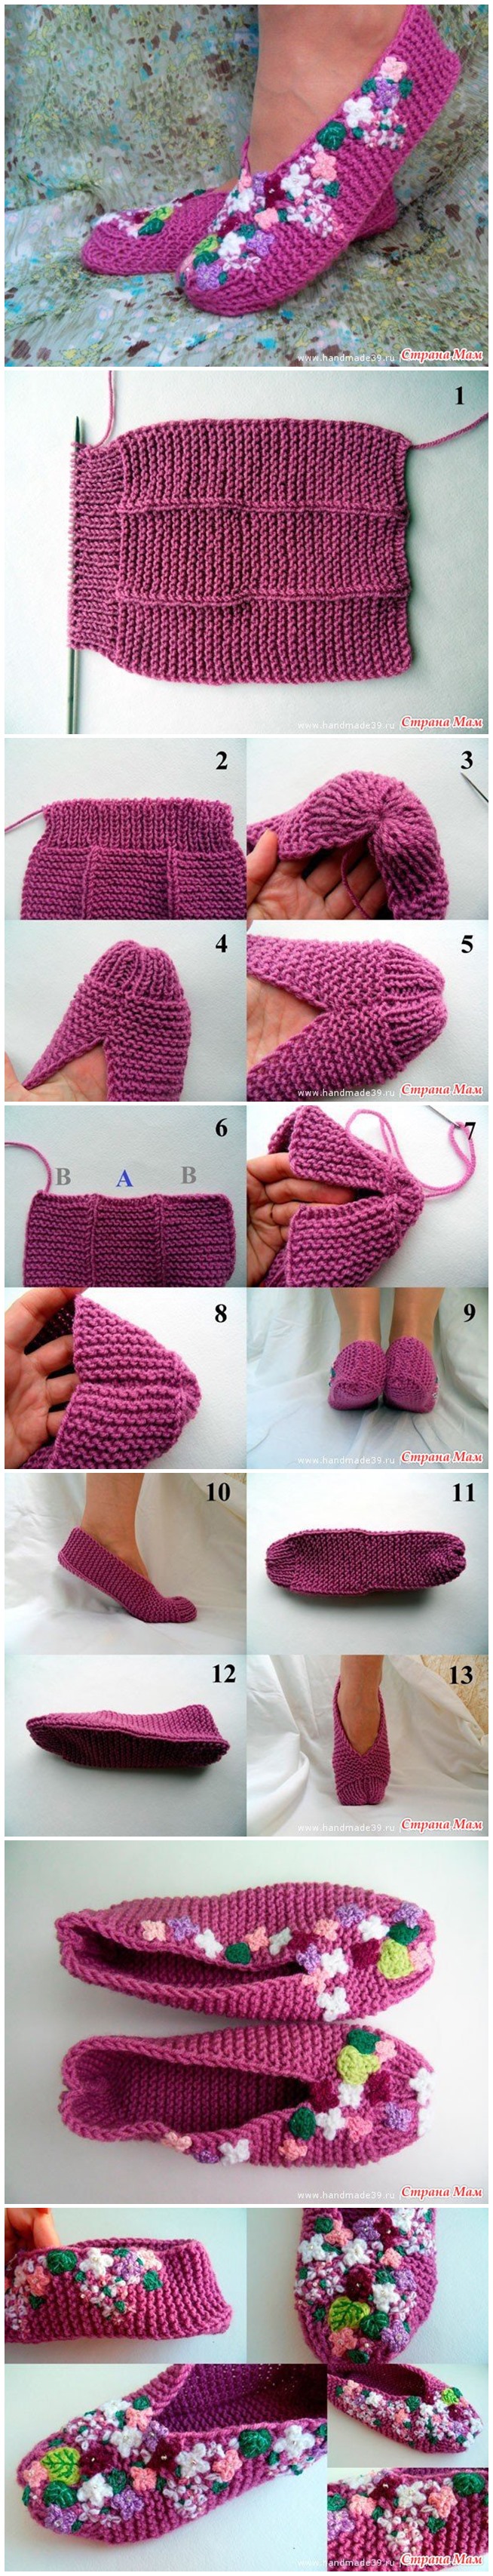 Knit a Useful and Pretty Slipper M